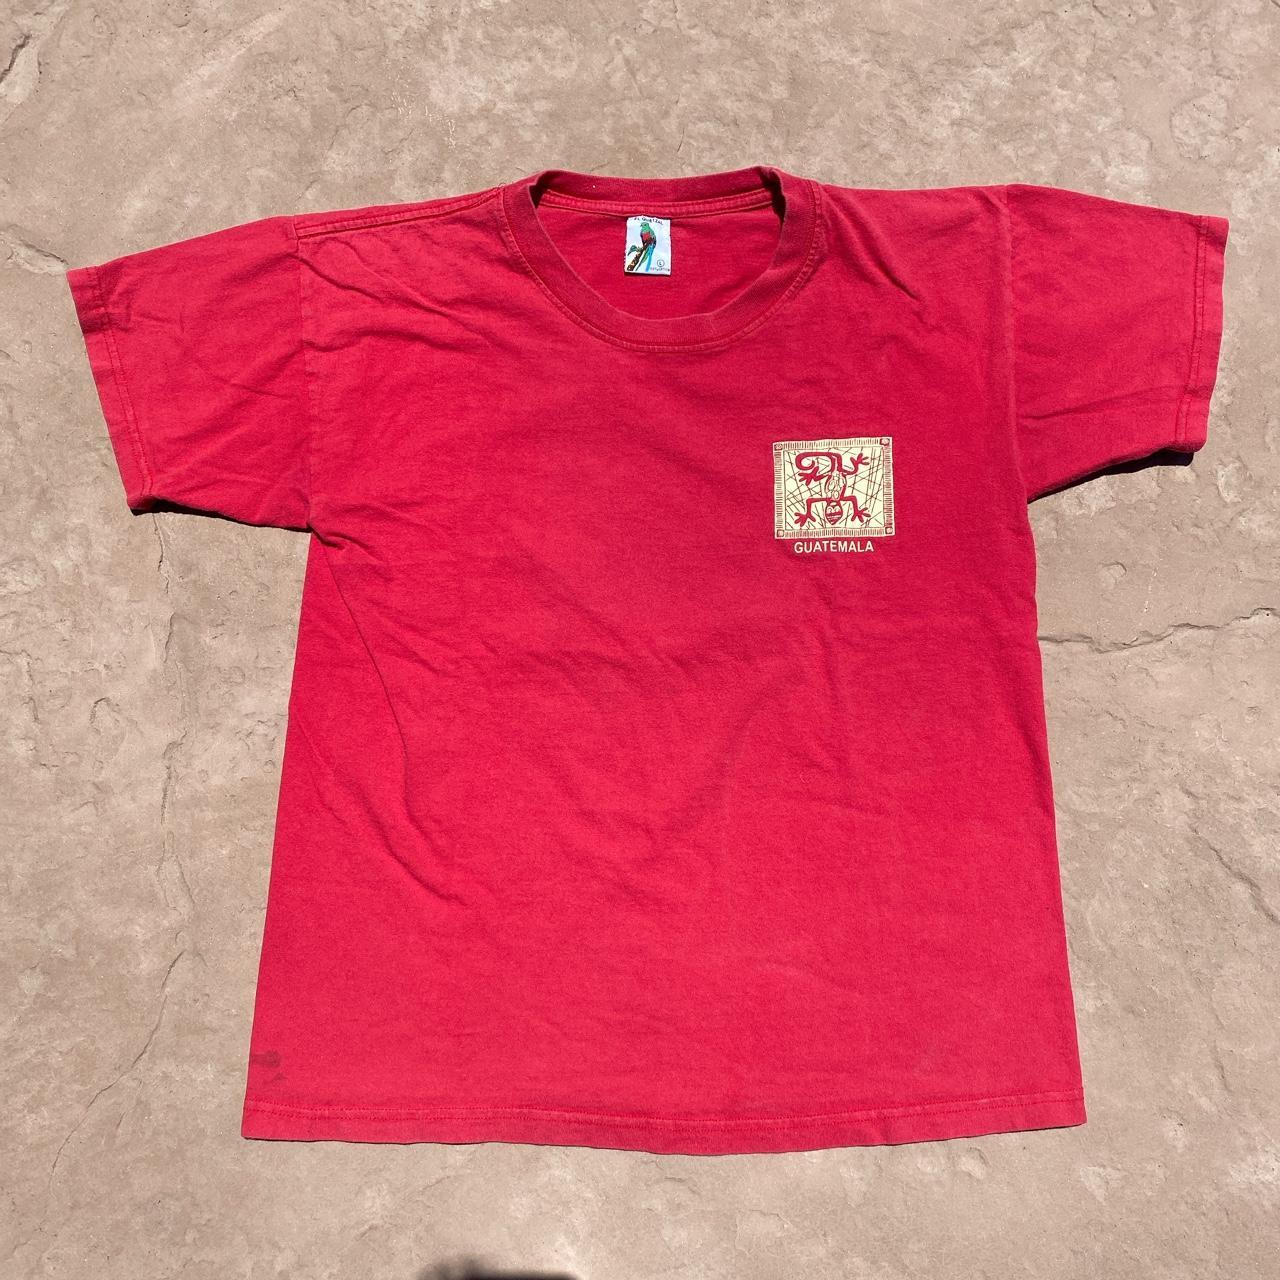 Men's Red and Cream T-shirt | Depop